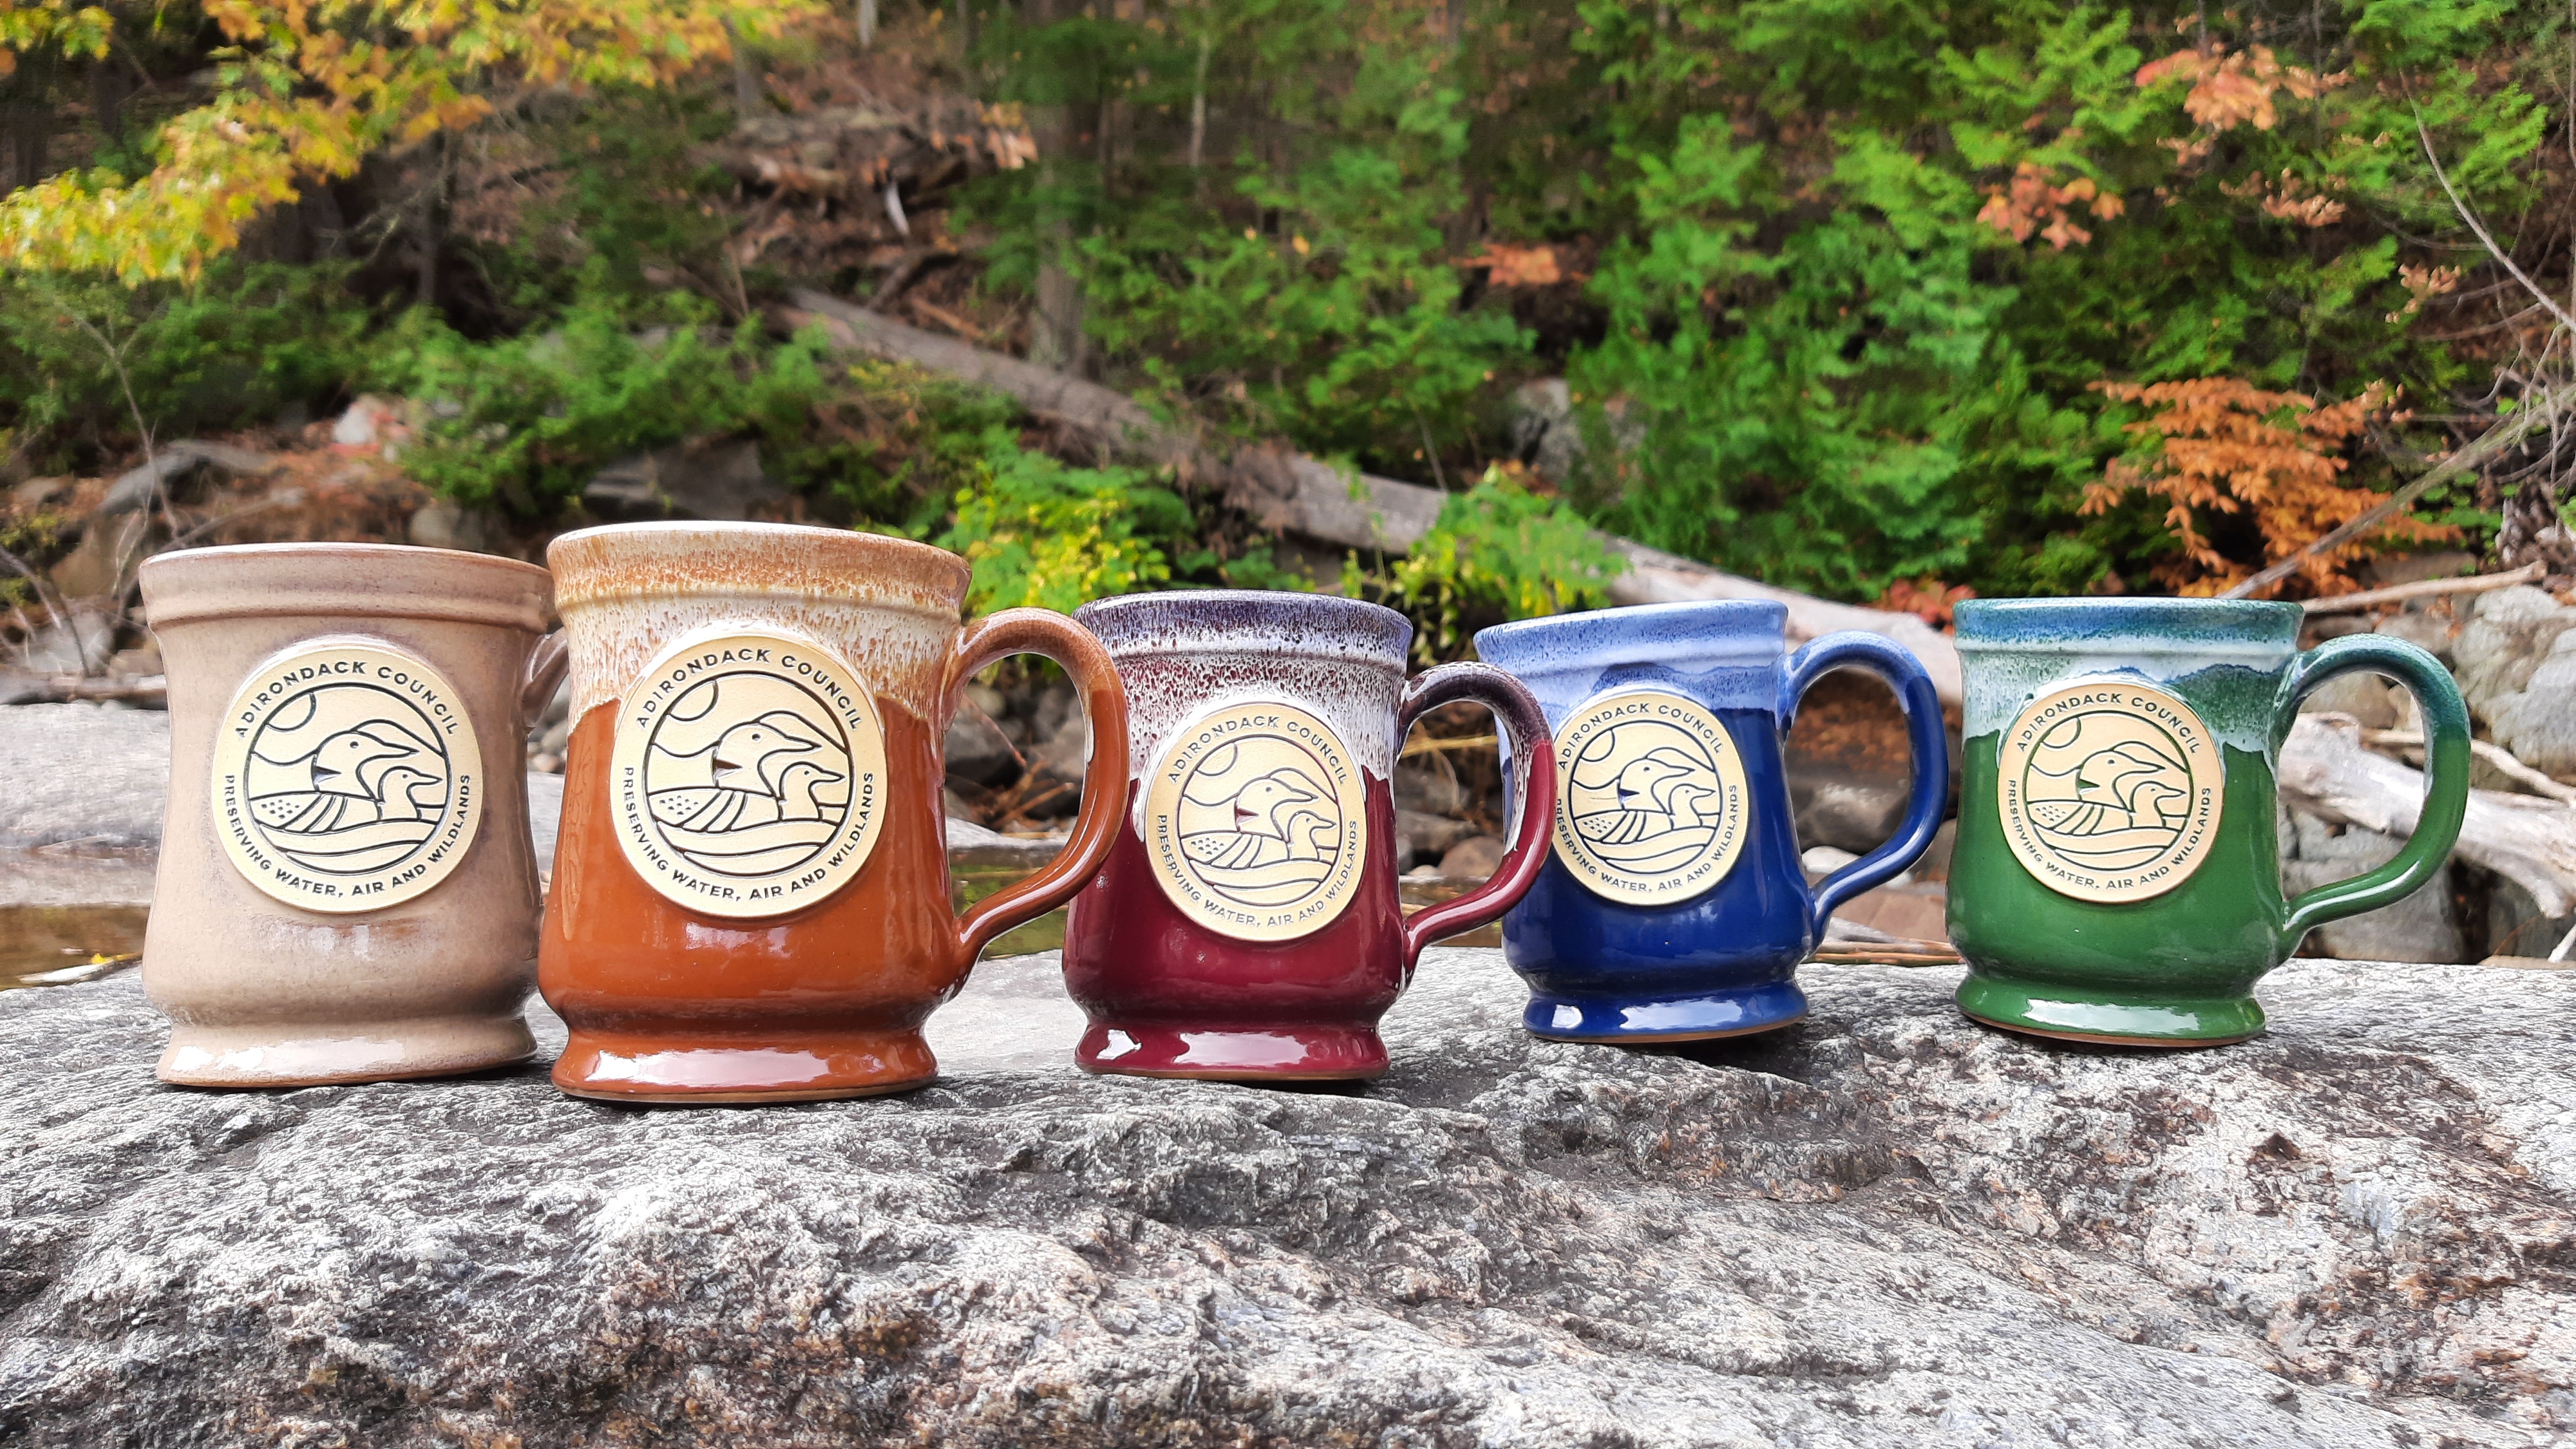 Ceramic mugs with the Adirondack Council logo